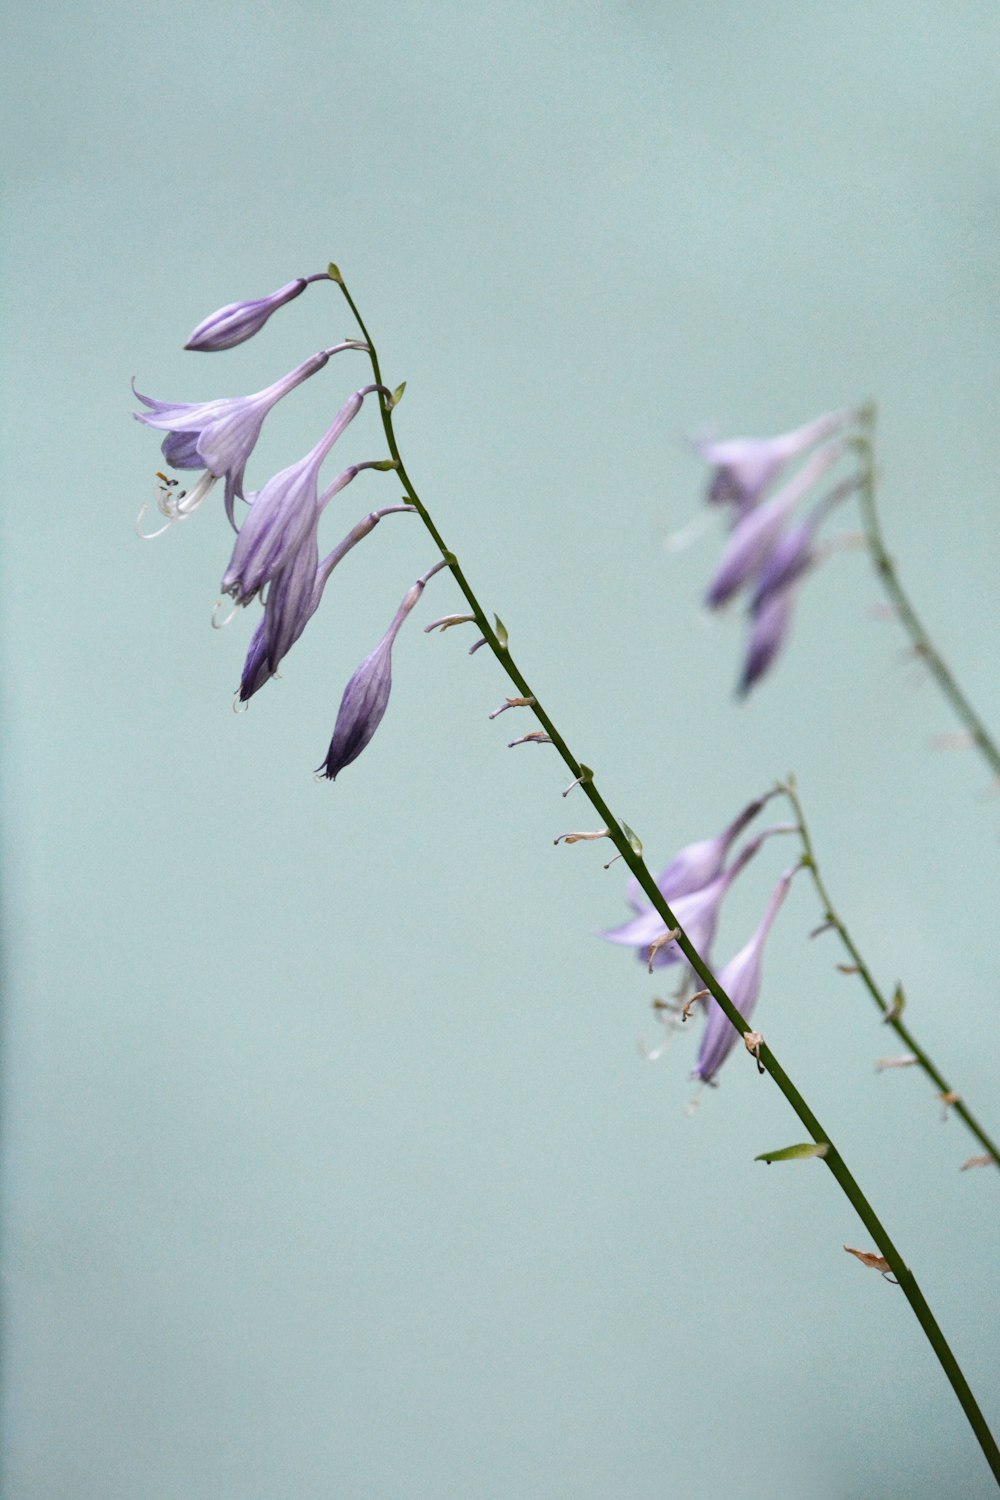 purple flower on green stem